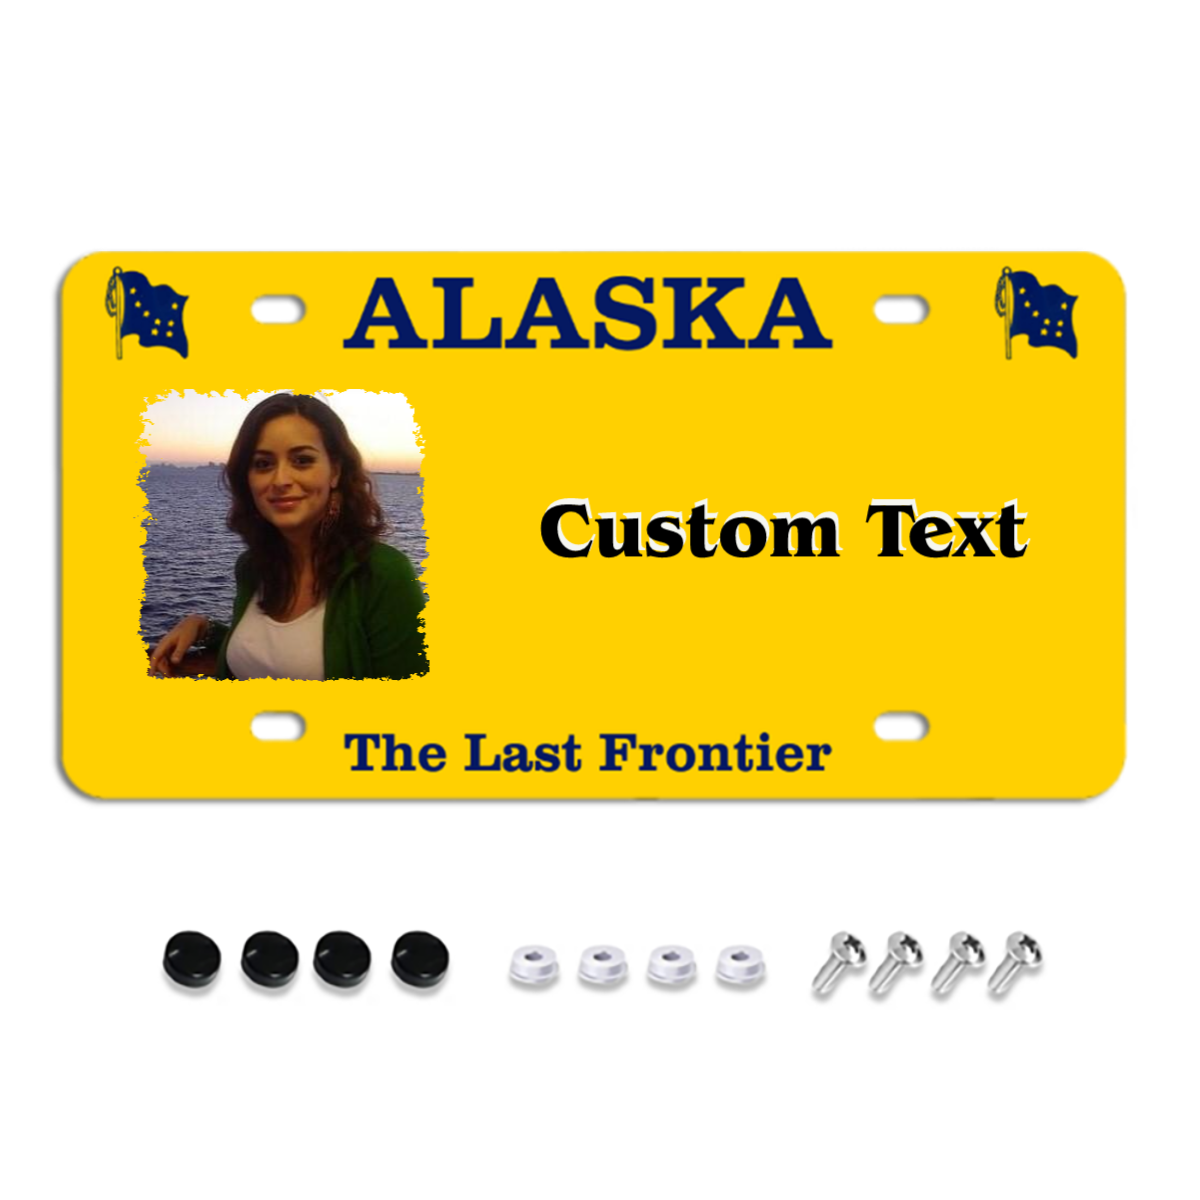 Alaska Custom License Plates, Personalized Photo & Text & Background